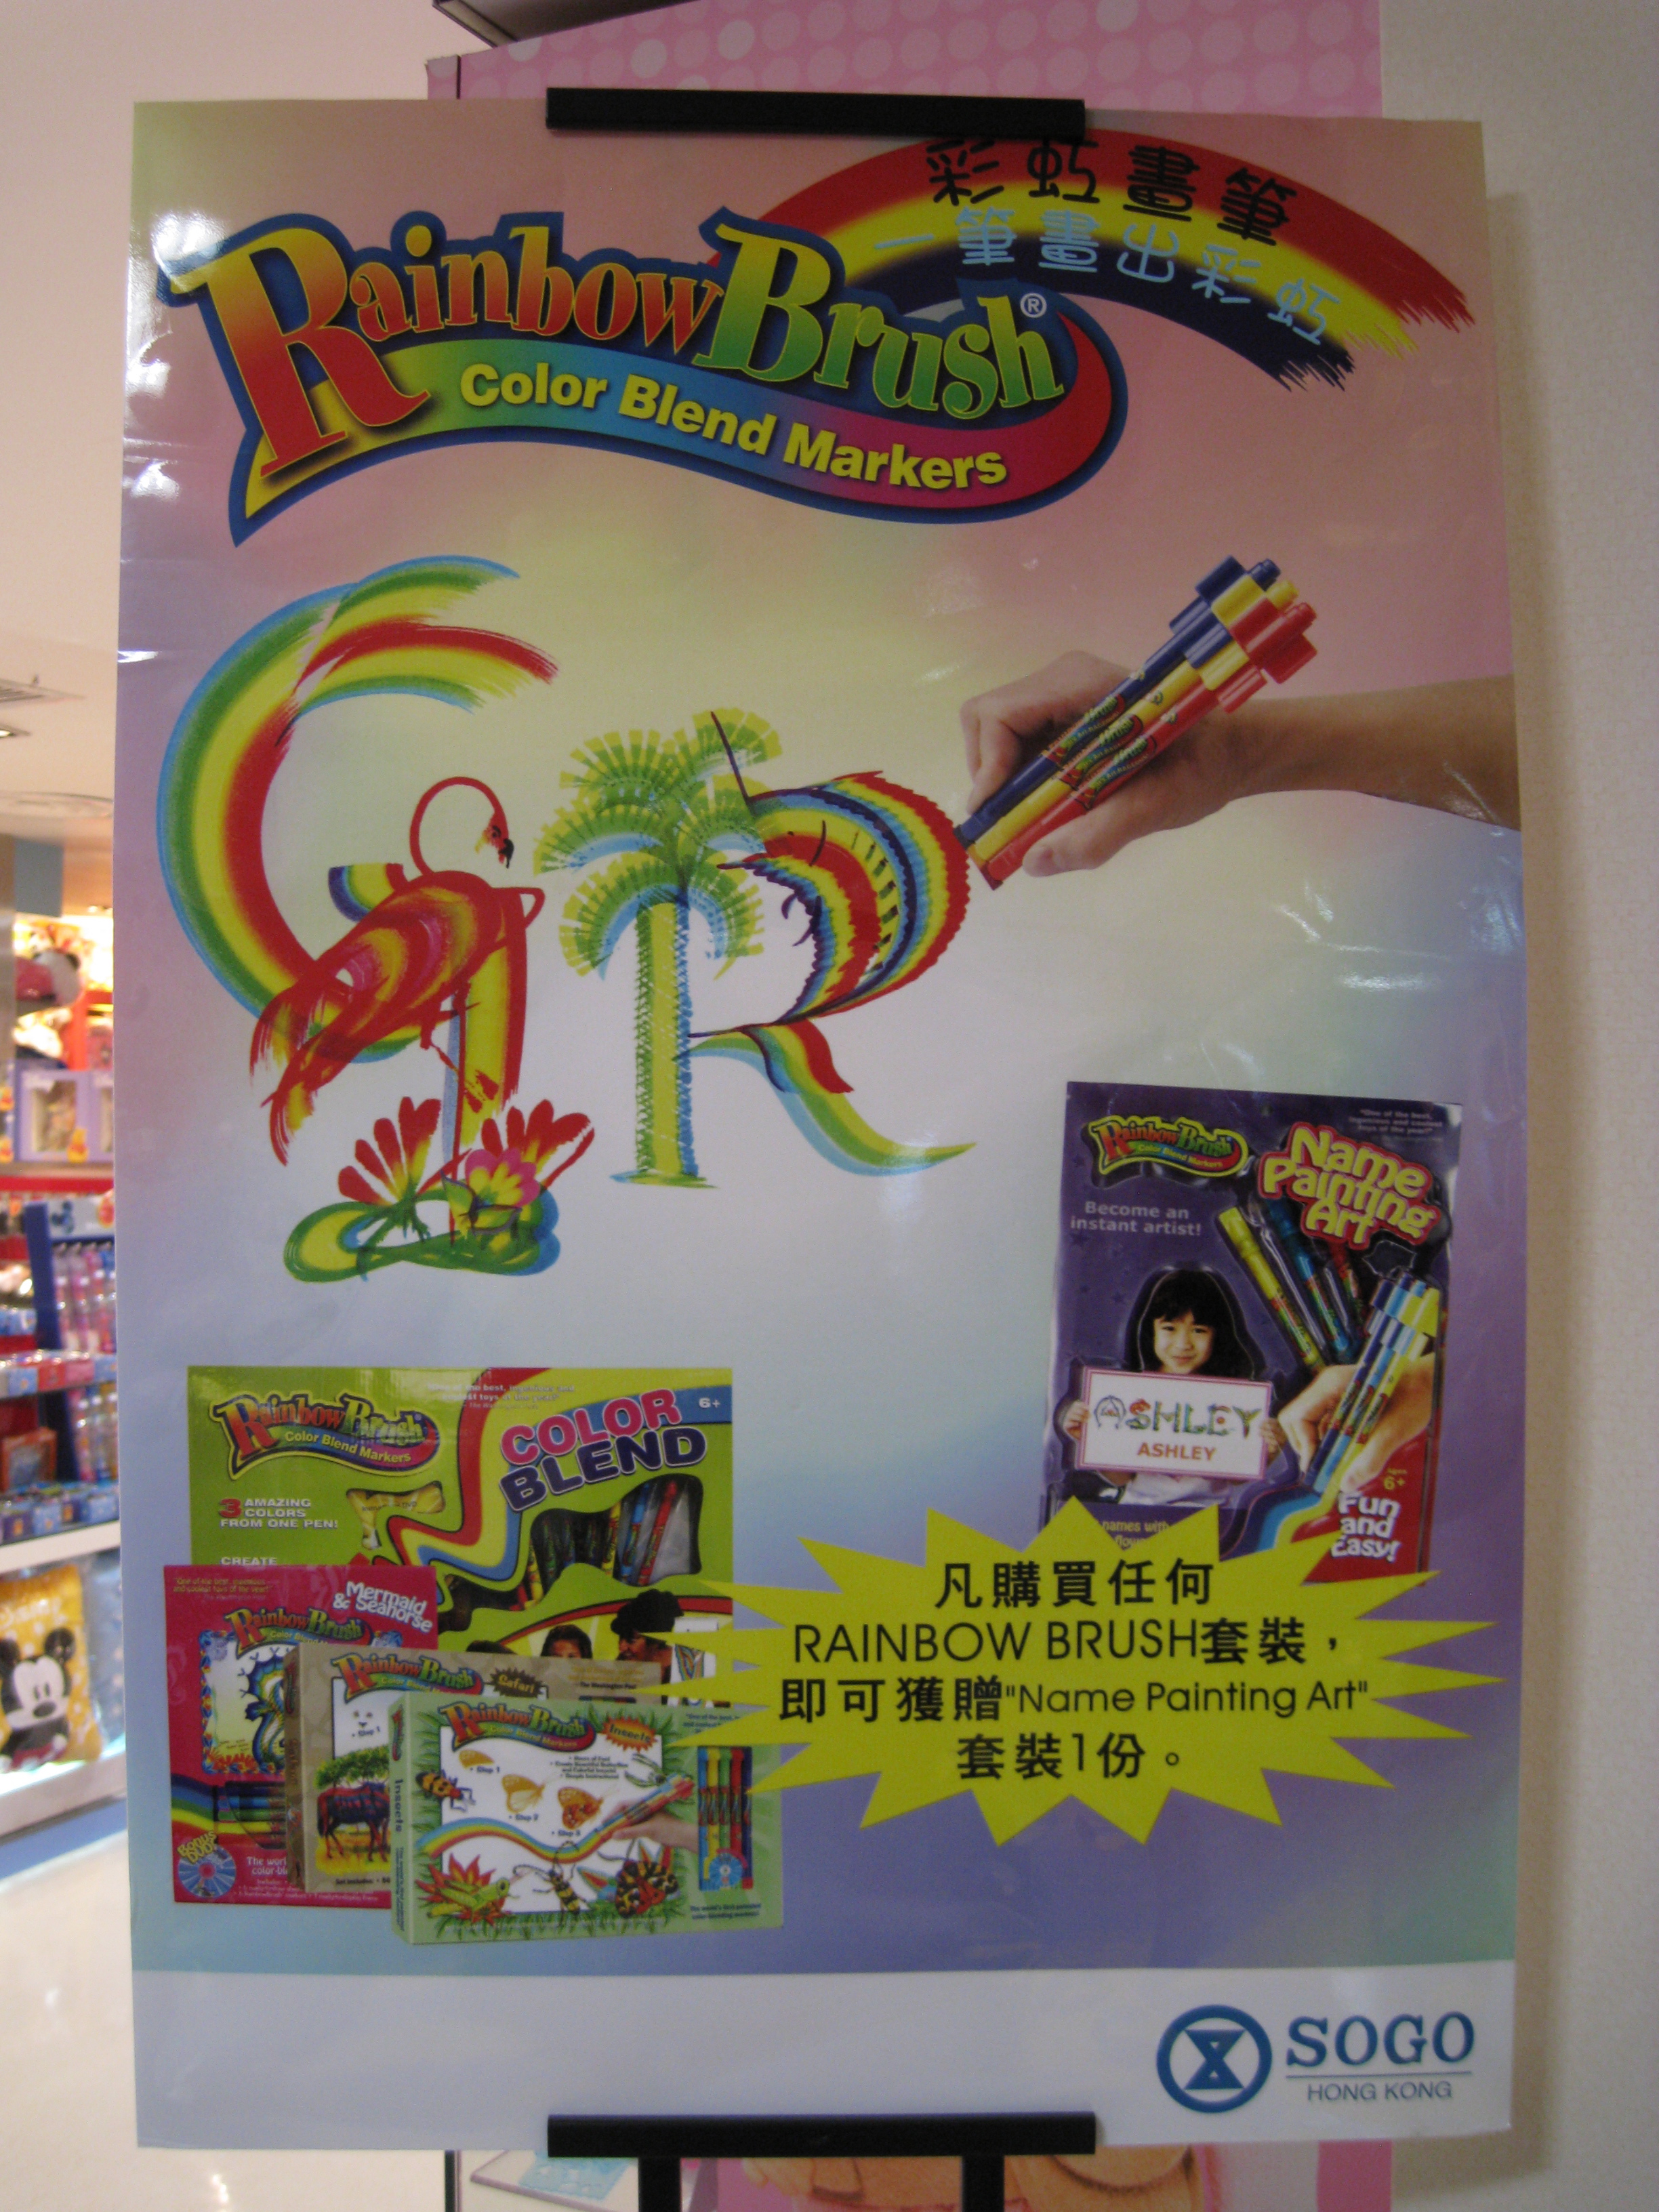 Sogo store sign advertising RainbowBrush in Hong Kong